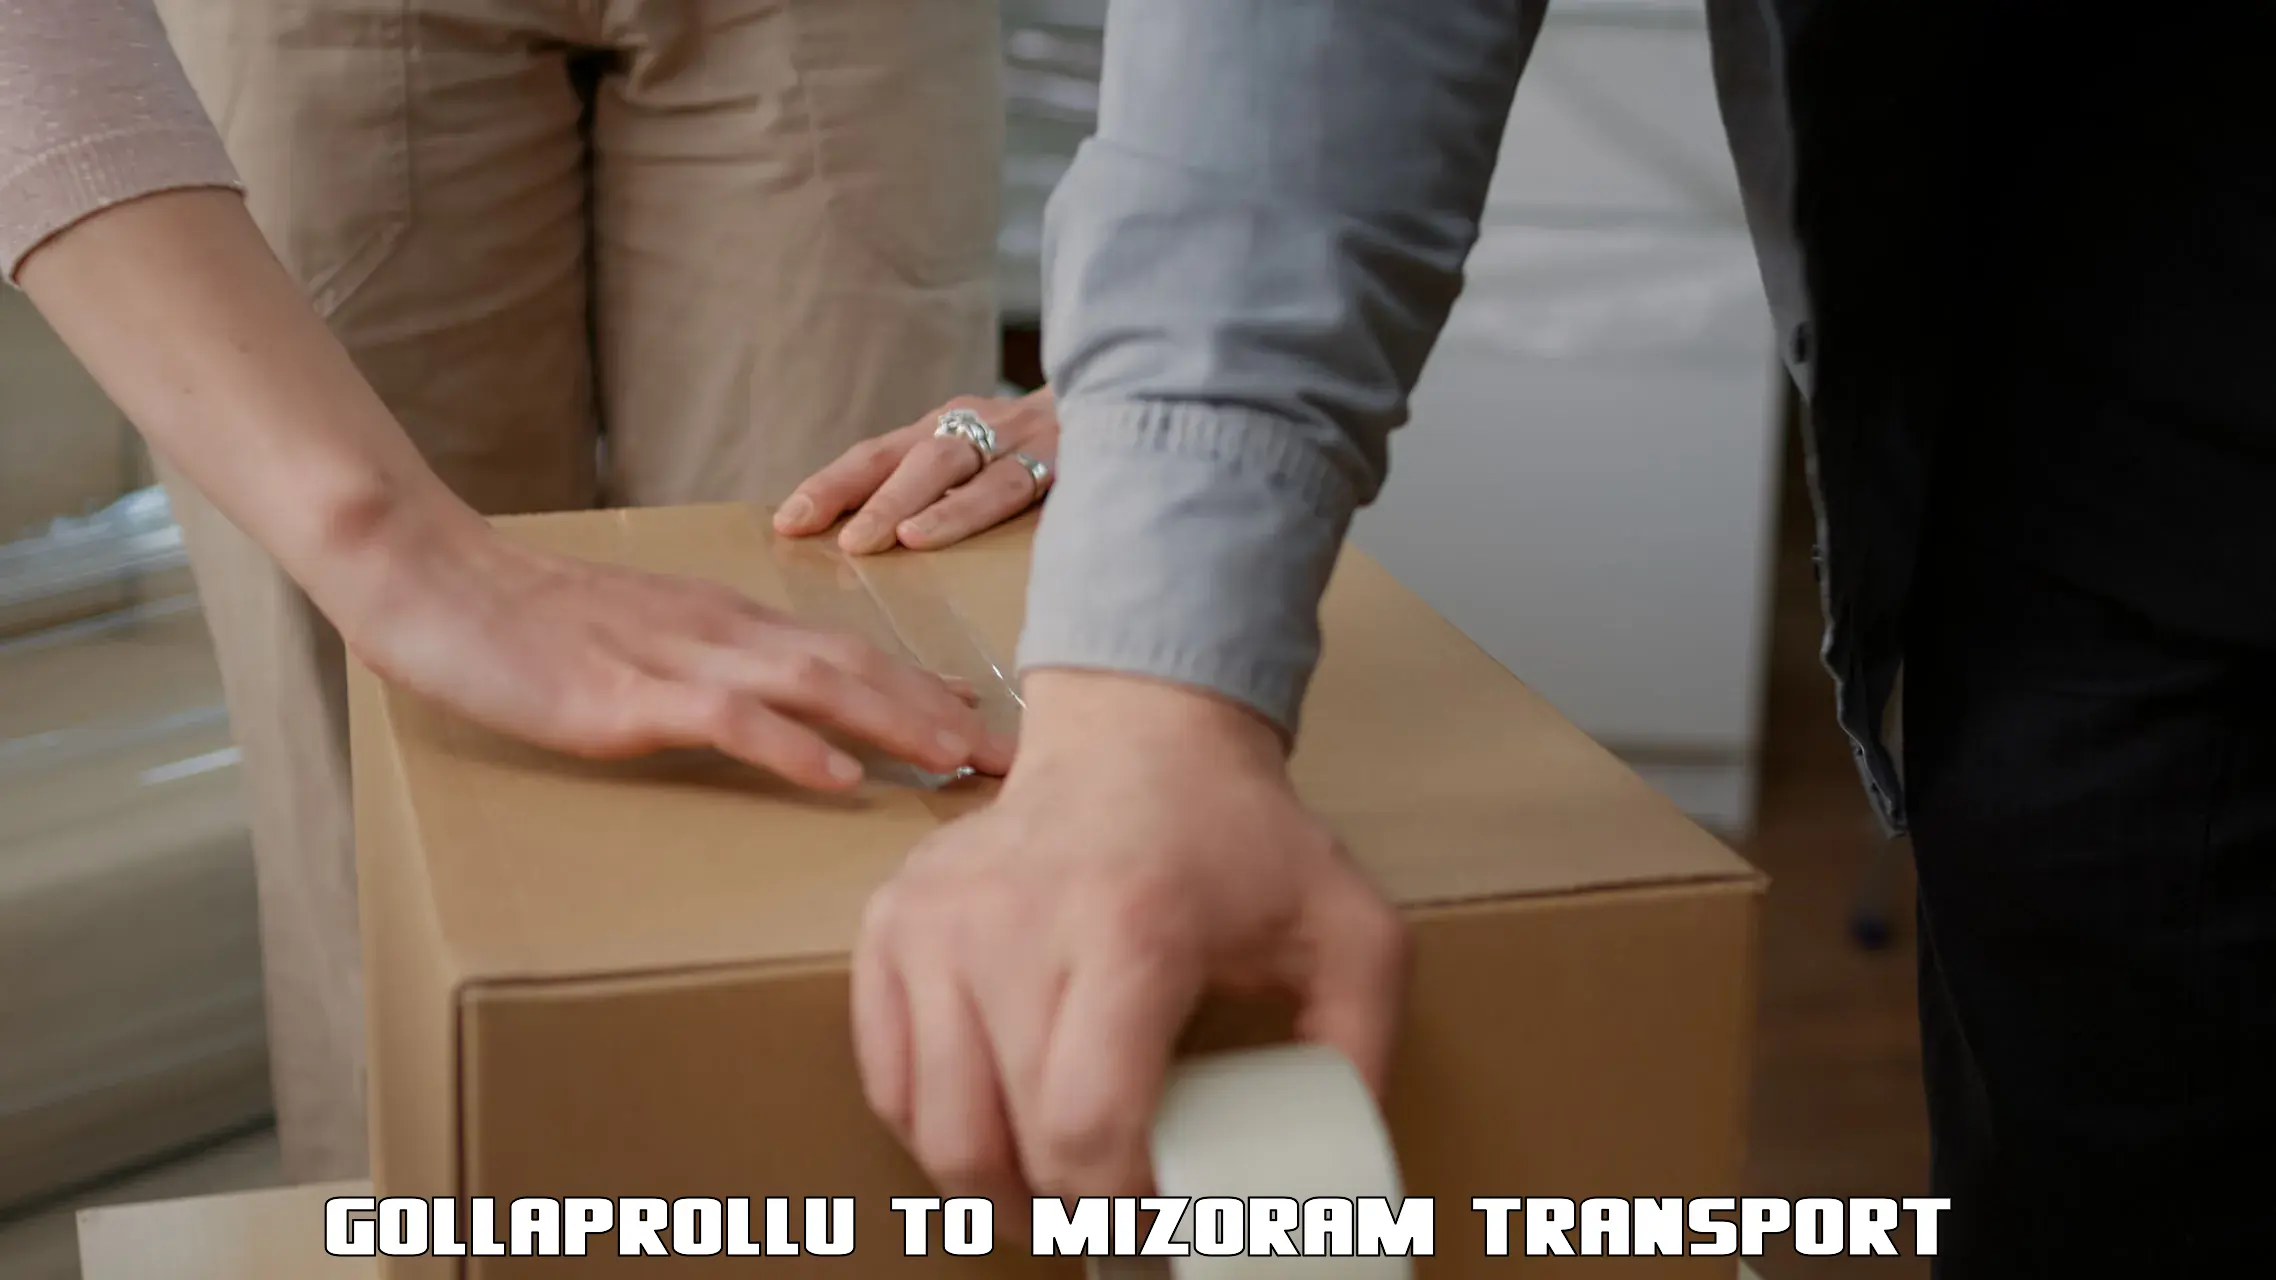 Two wheeler parcel service Gollaprollu to Mizoram